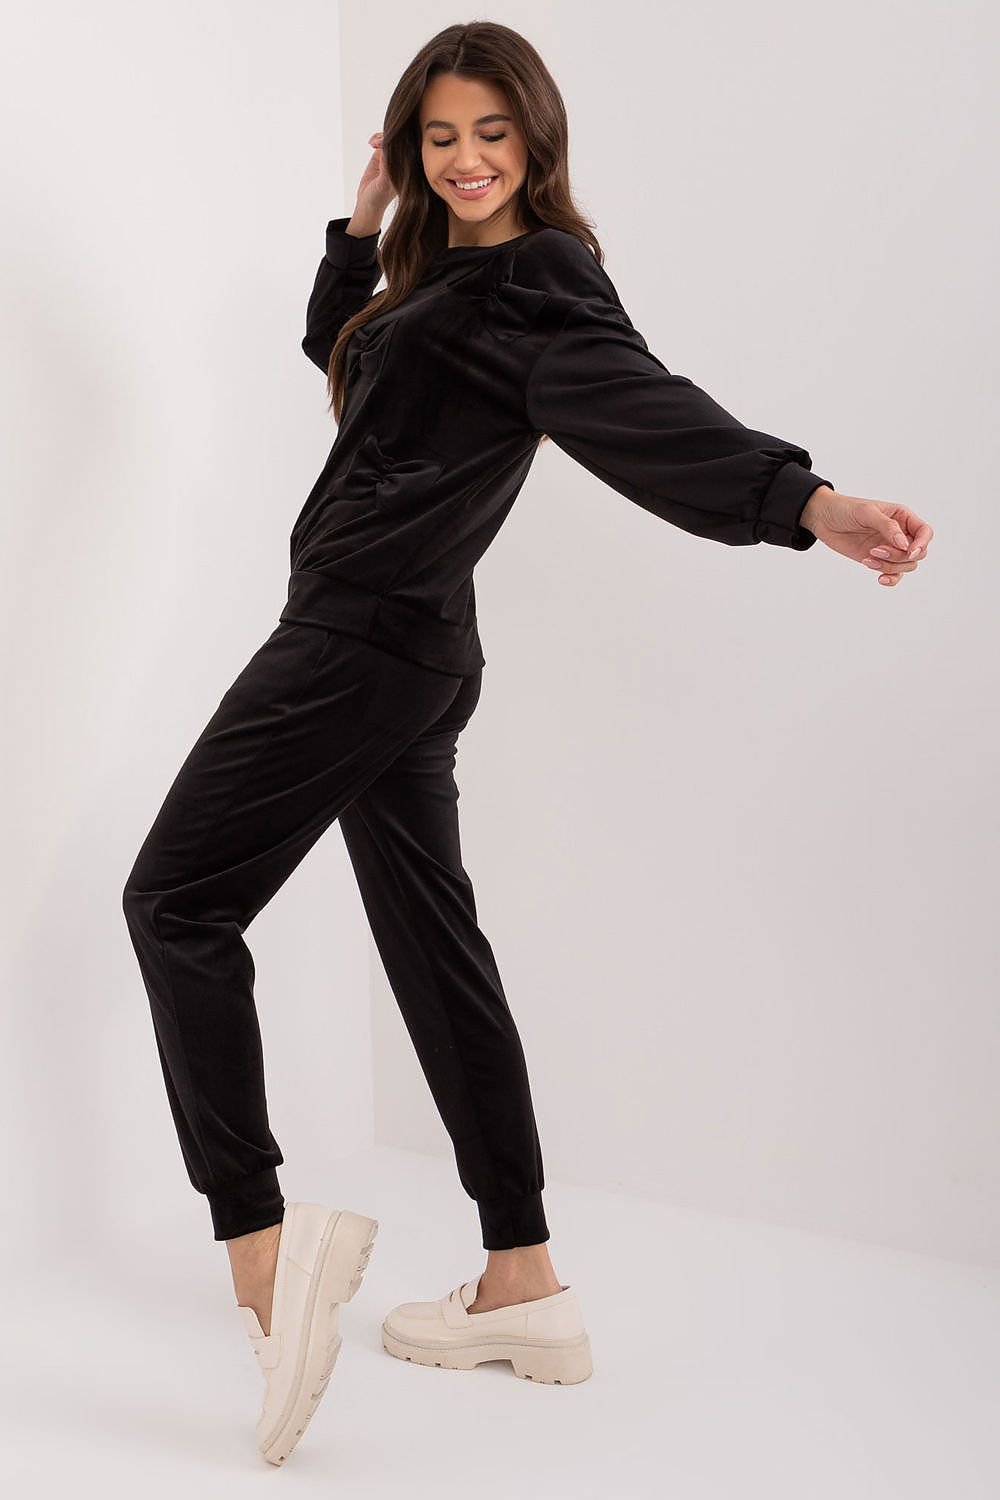 TEEK - Bowed Up Sweatsuit SET TEEK MH black One Size 